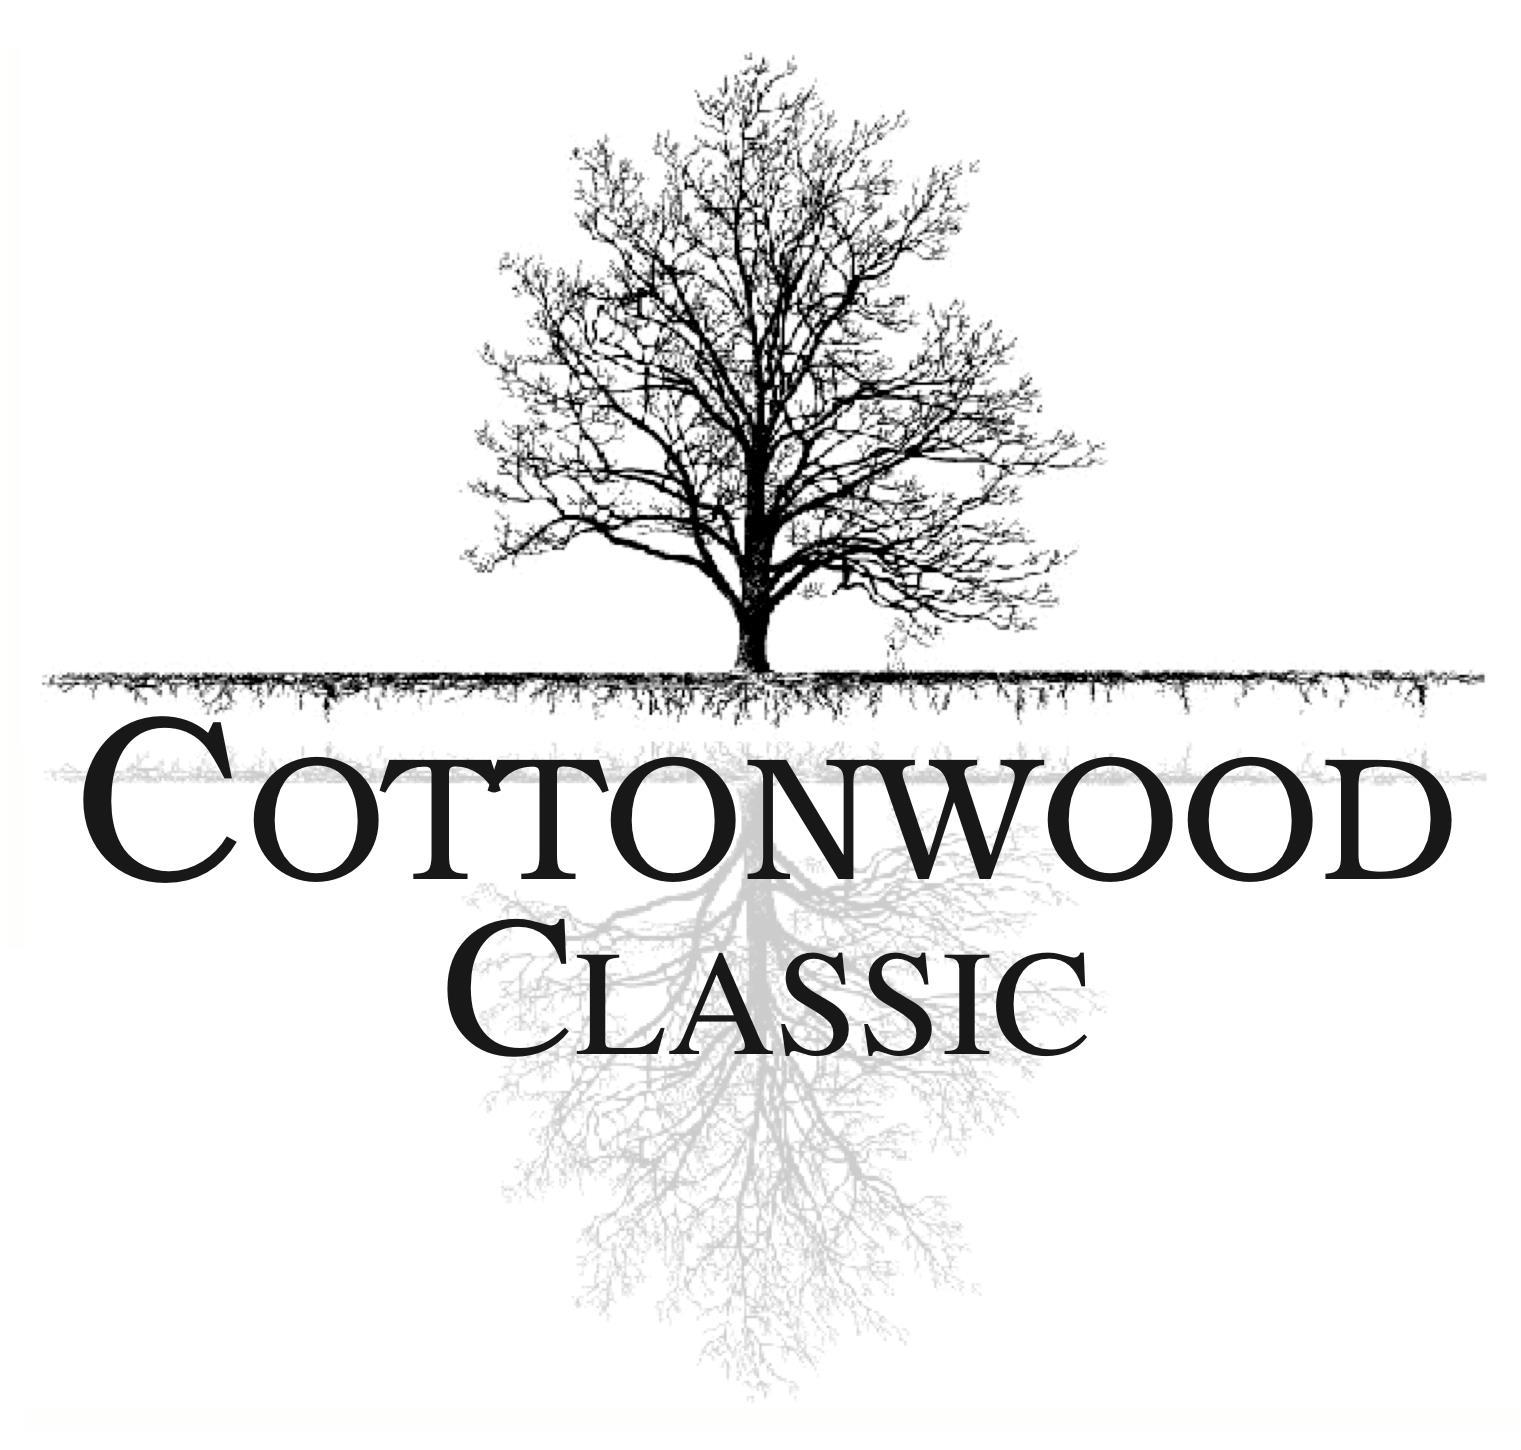 Cottonwood Classic - KQHA Show Photo